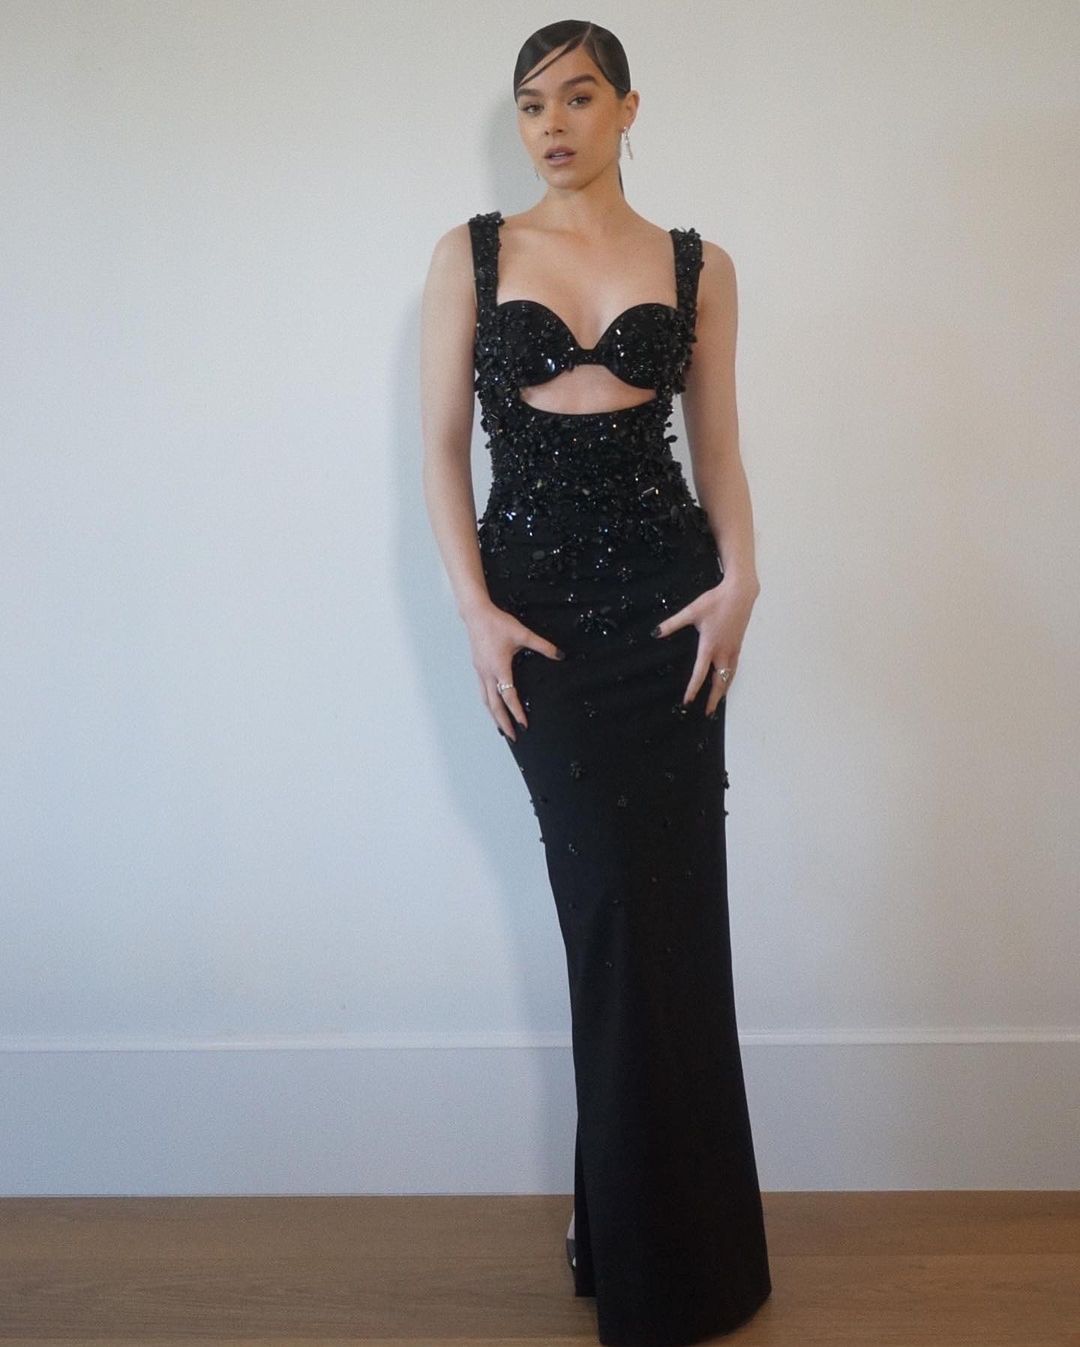 Hailee Steinfeld's Gorgeous Black Embellished Dress